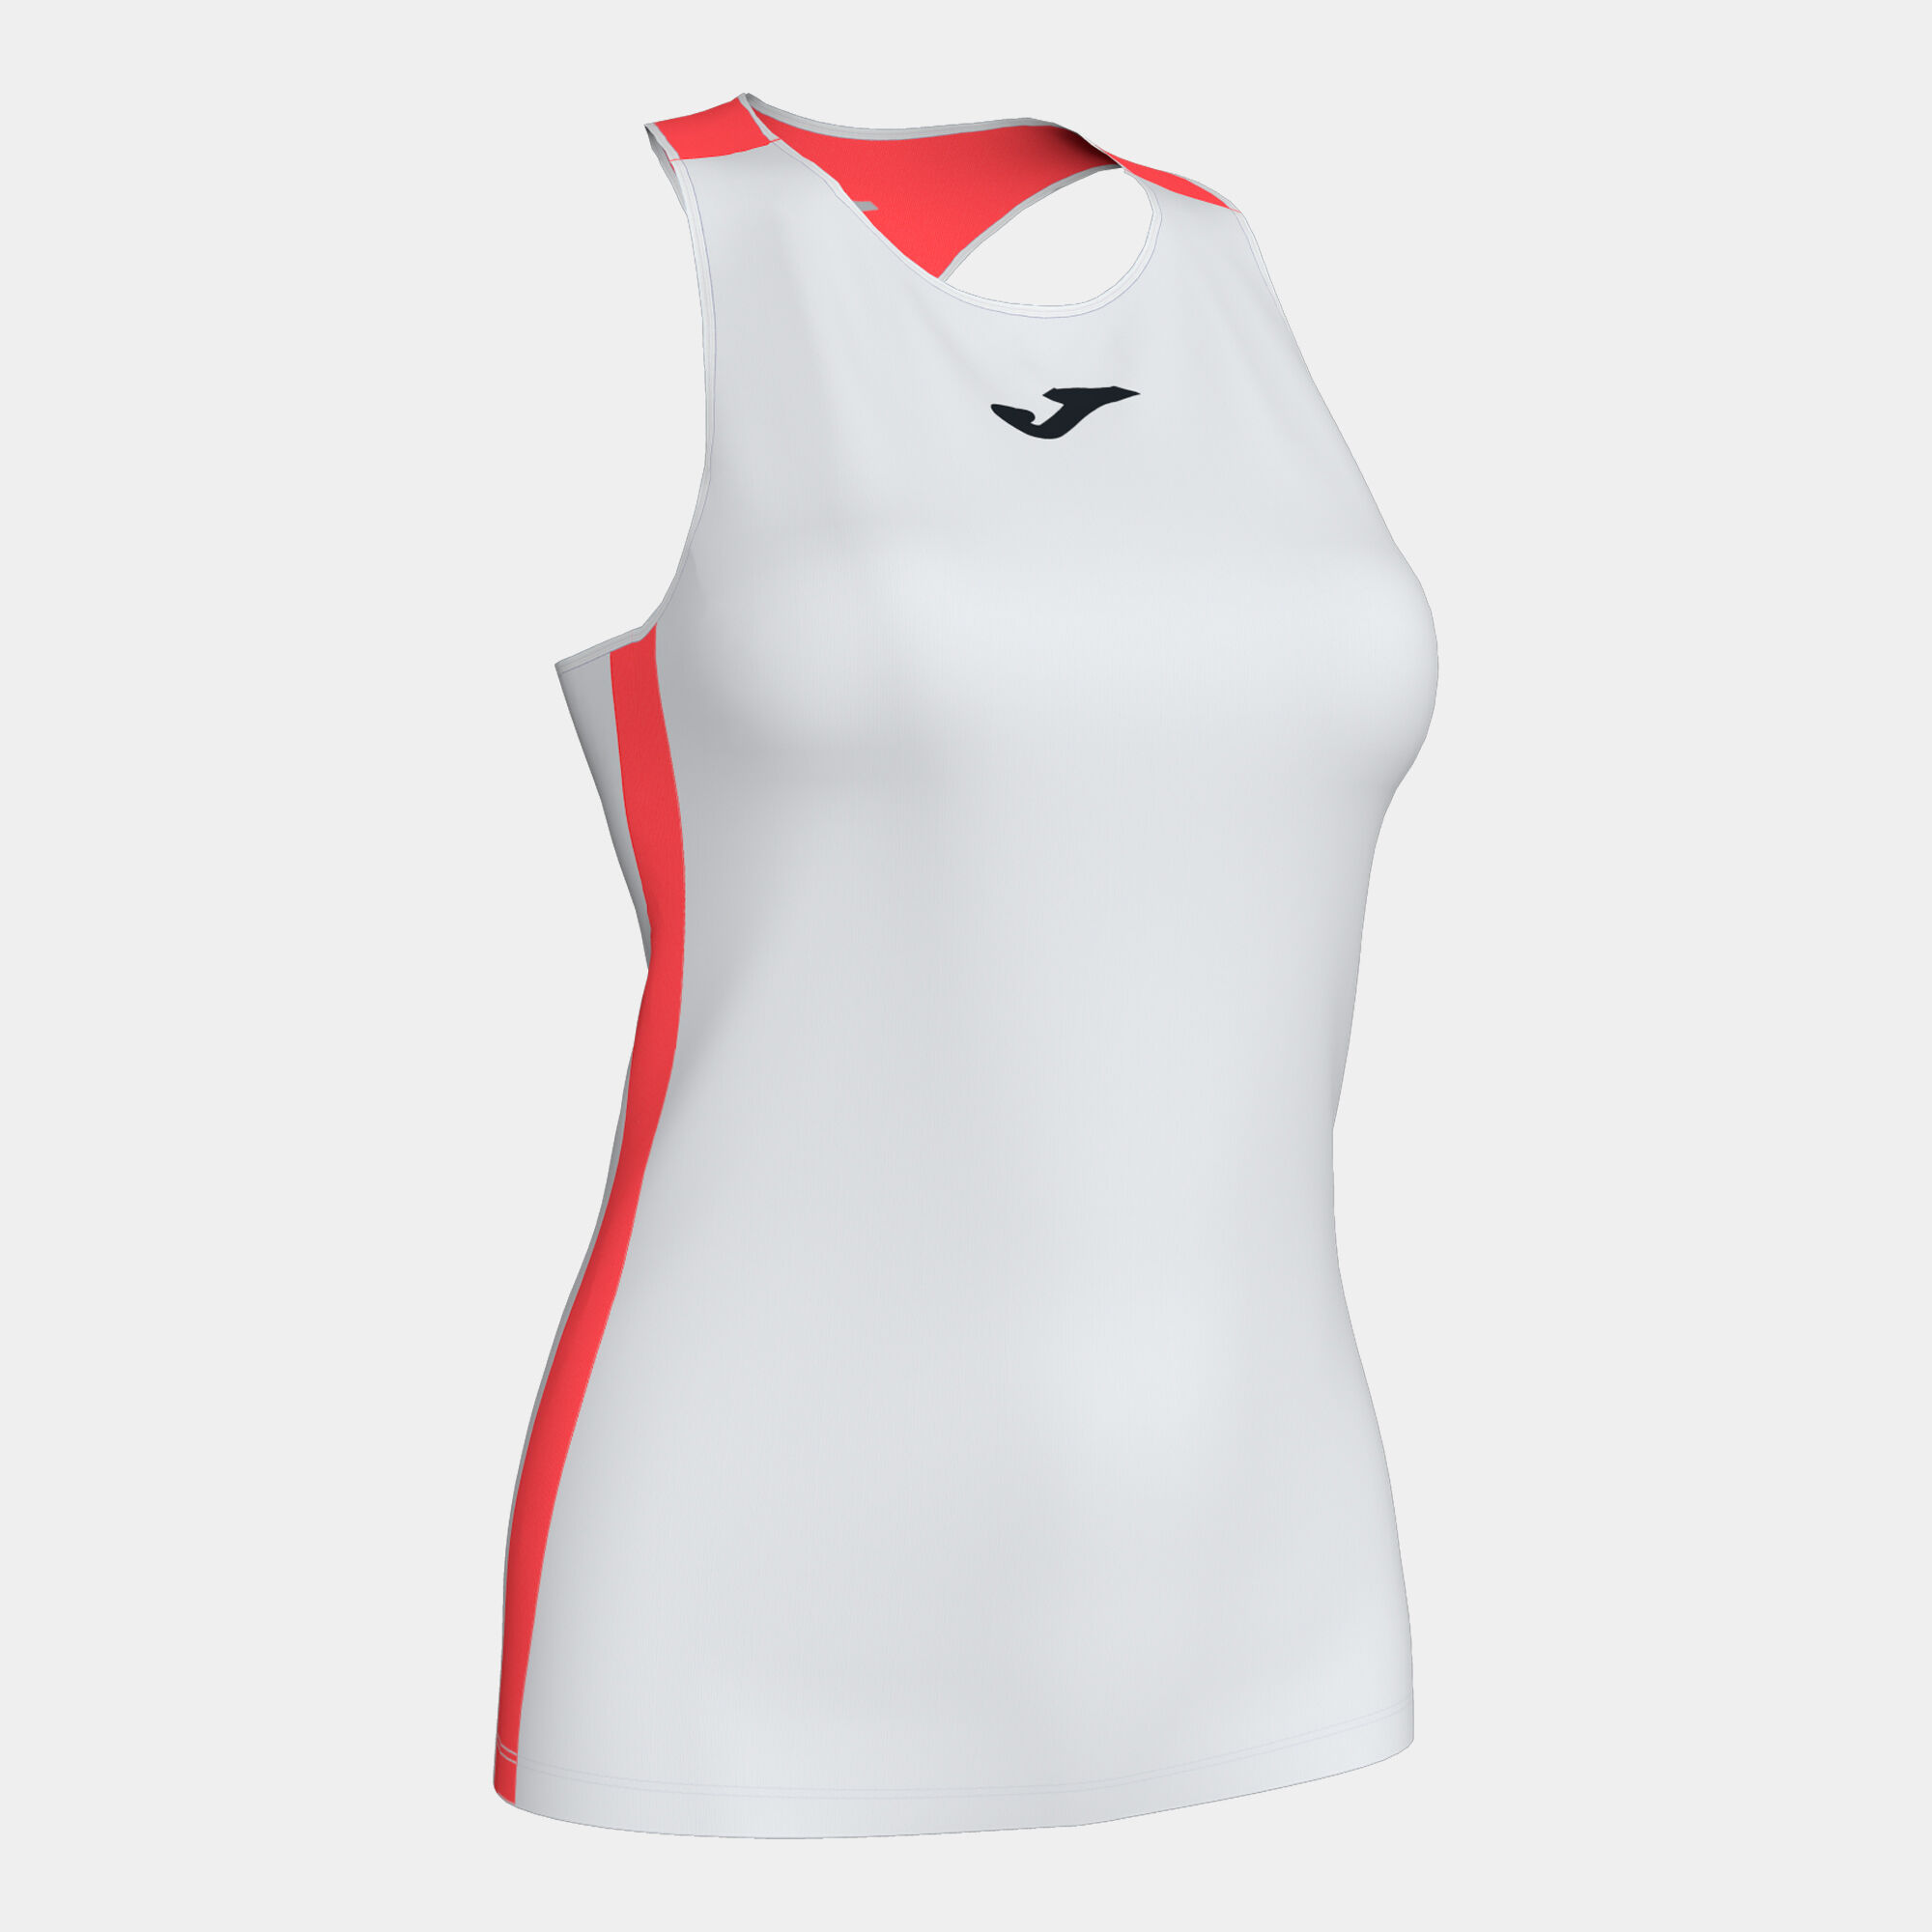 Camiseta tirantes mujer Torneo blanco coral flúor